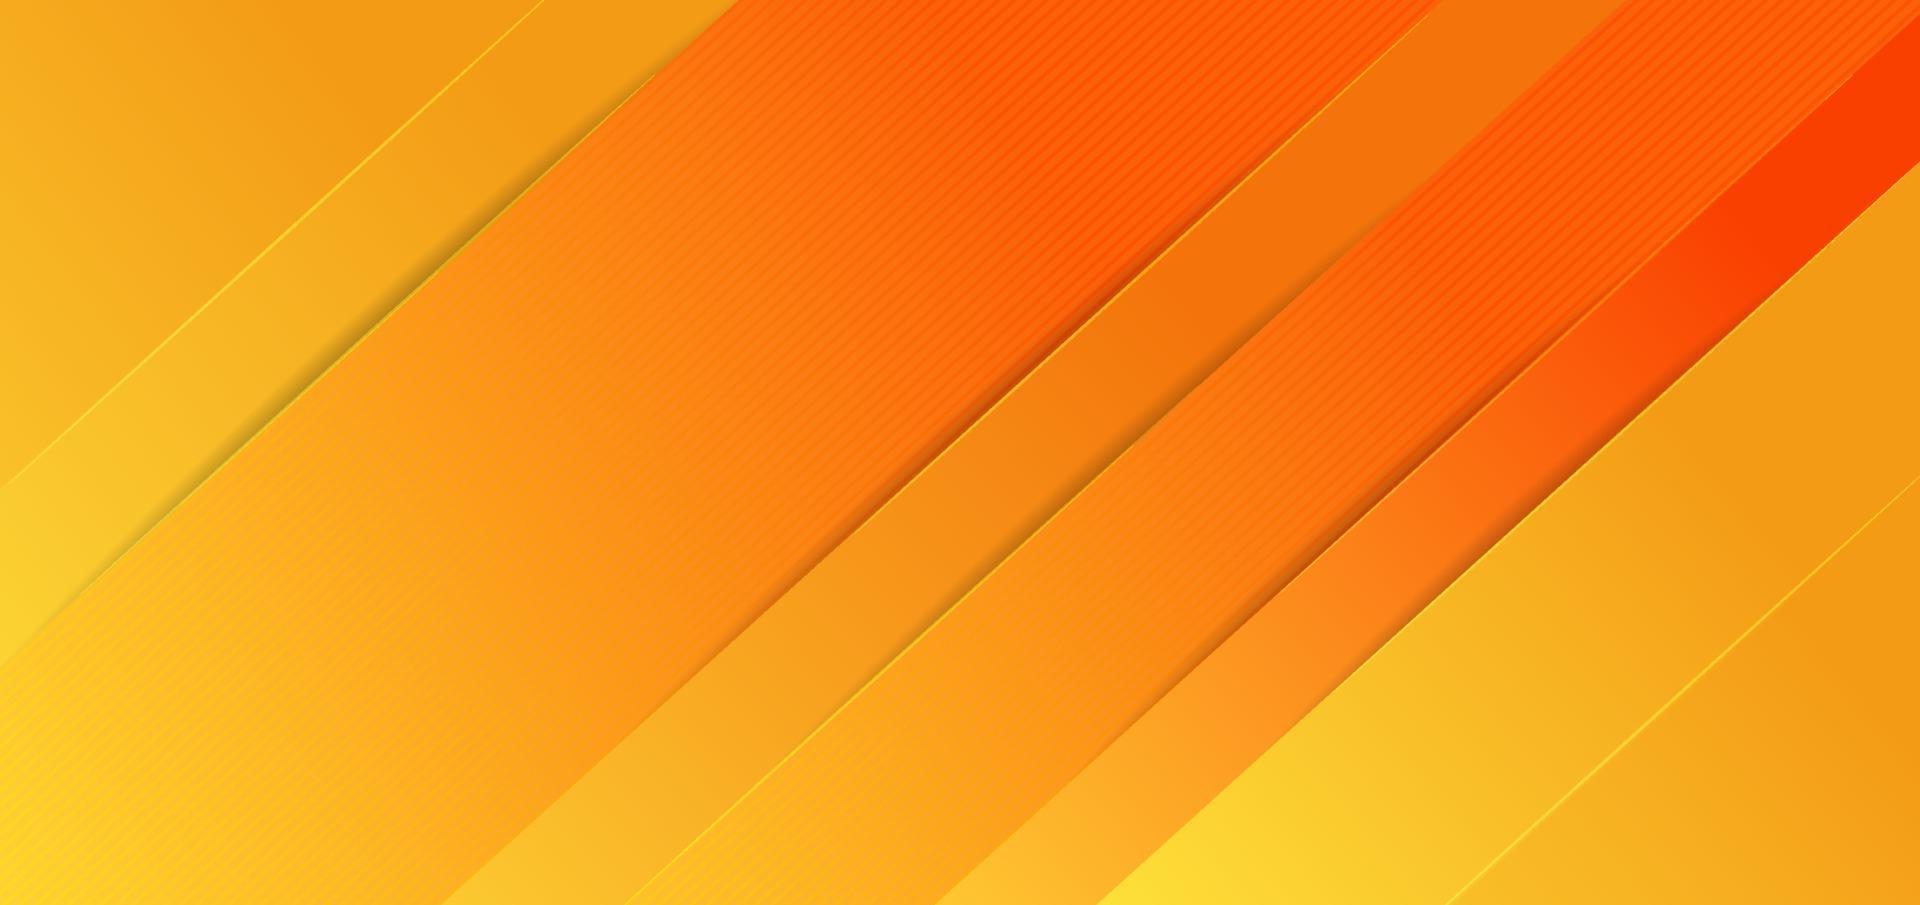 abstrakt diagonal vibrerande gul orange bakgrund. teknik koncept. vektor